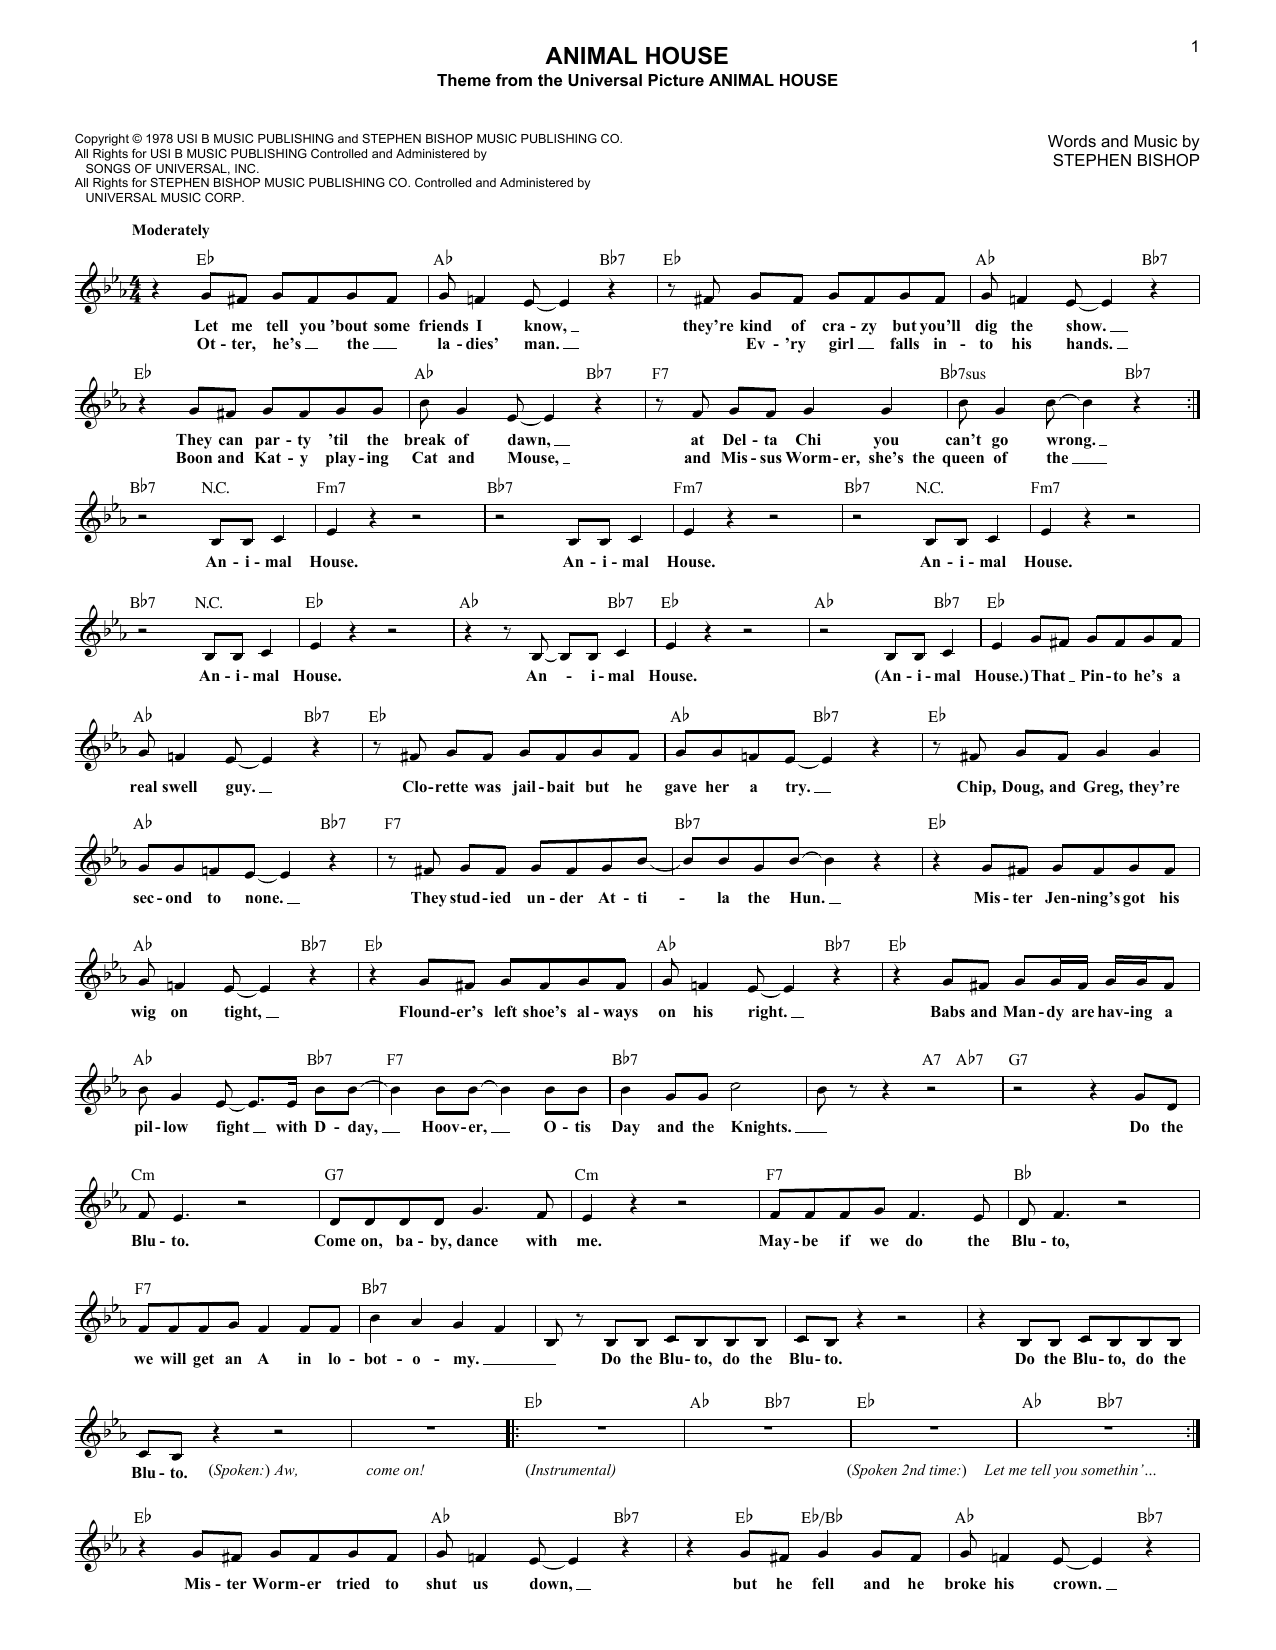 Stephen Bishop Animal House Sheet Music Notes & Chords for Melody Line, Lyrics & Chords - Download or Print PDF